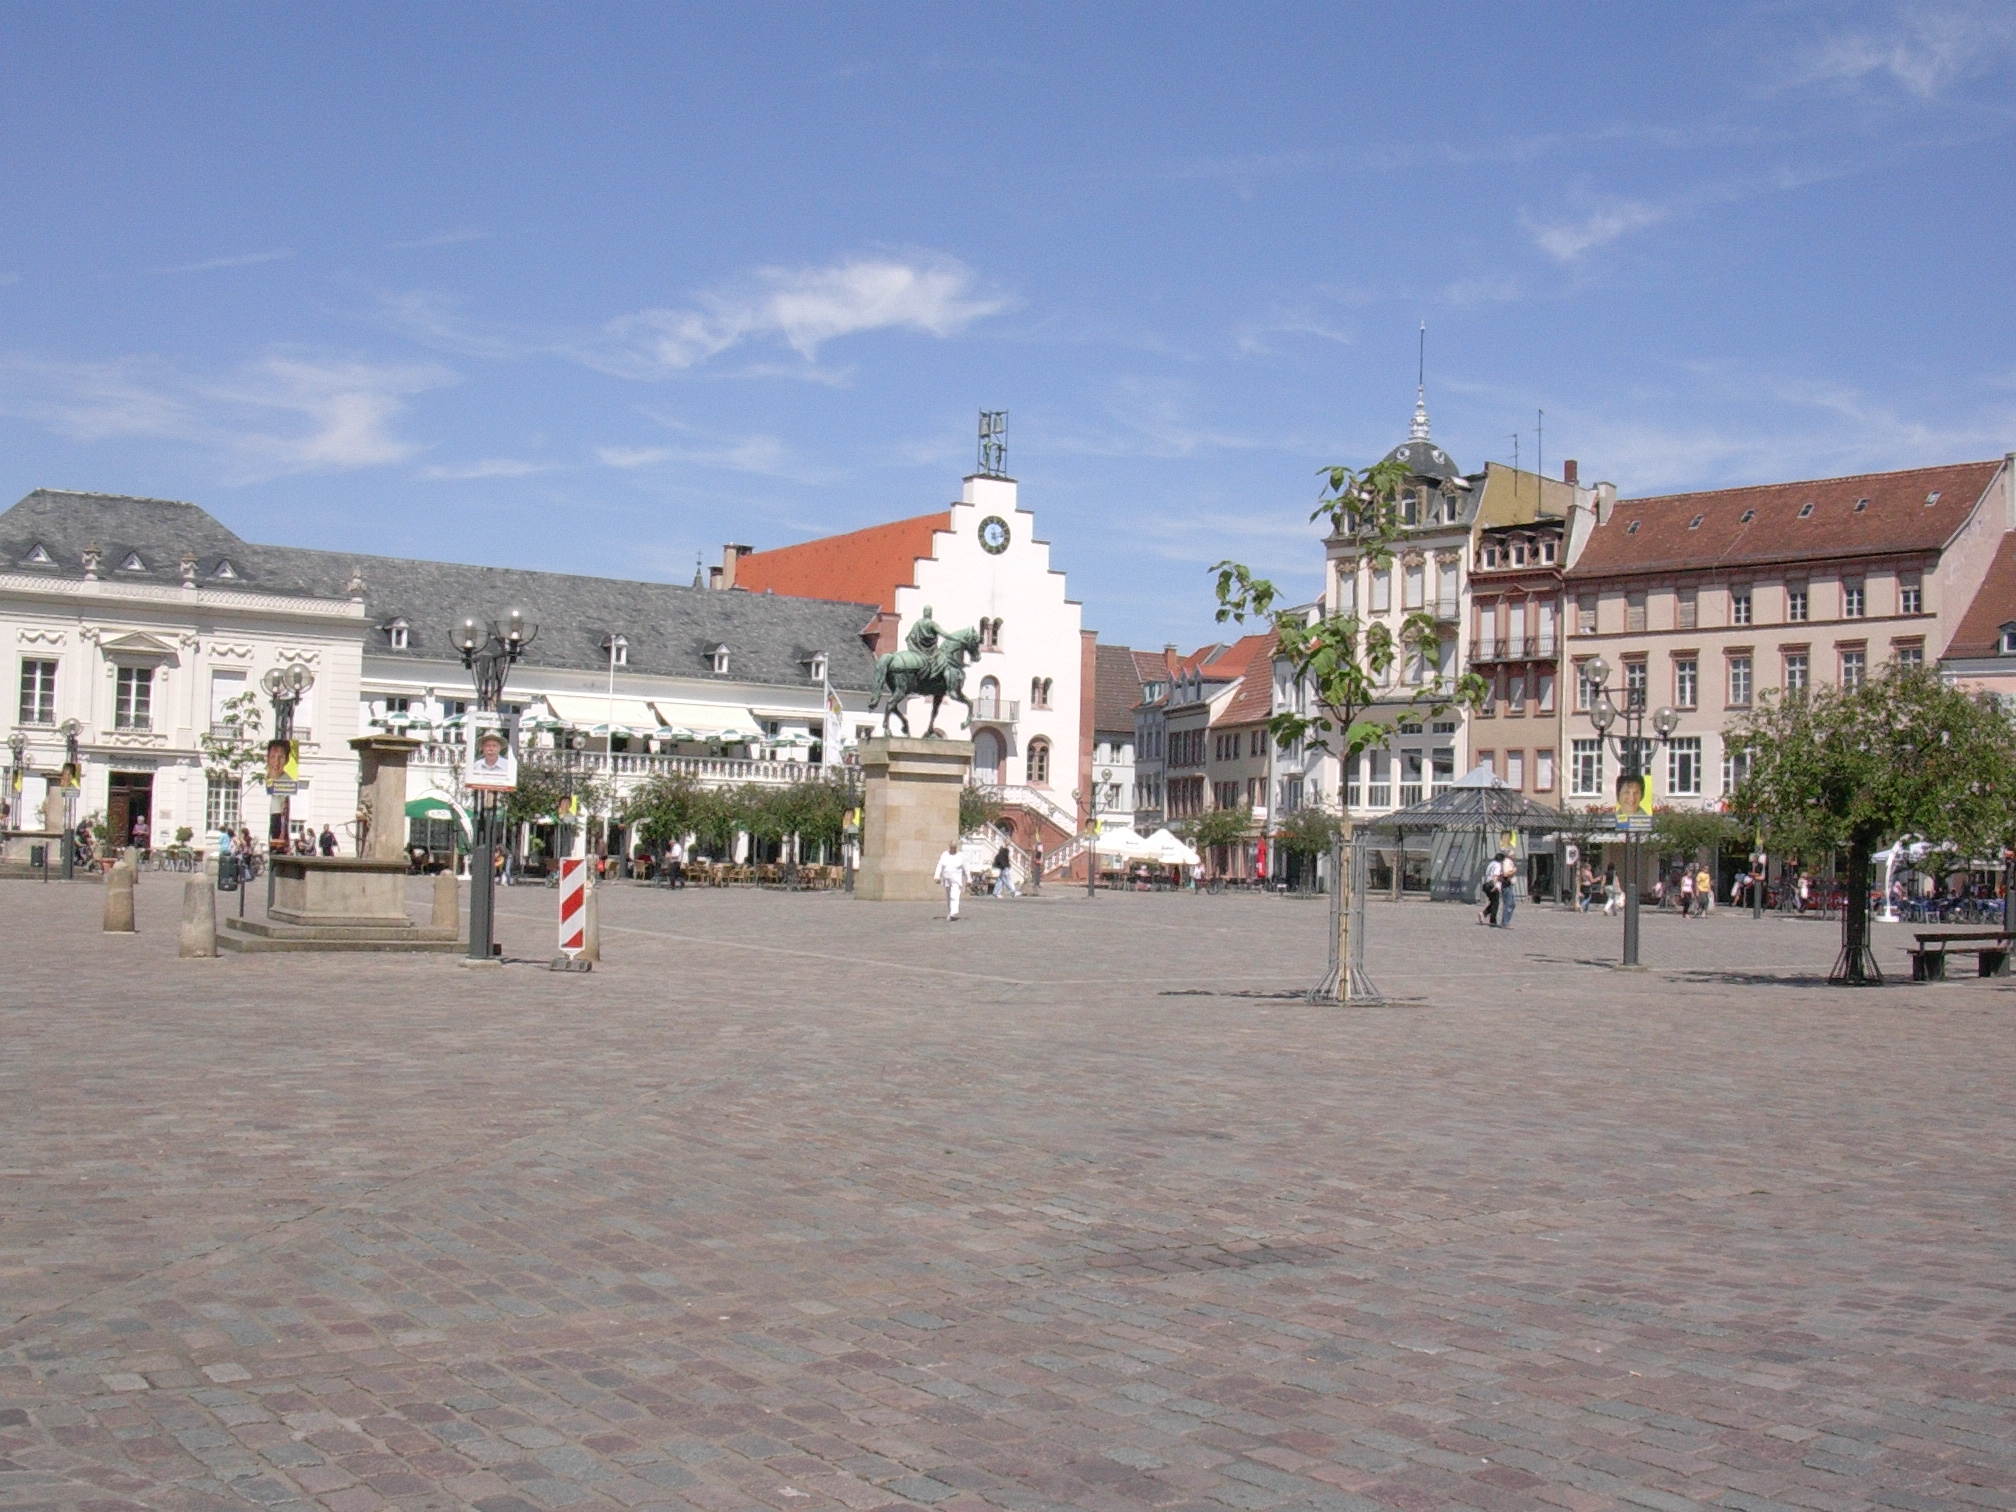 Datei:Rathausplatz Landau.jpg